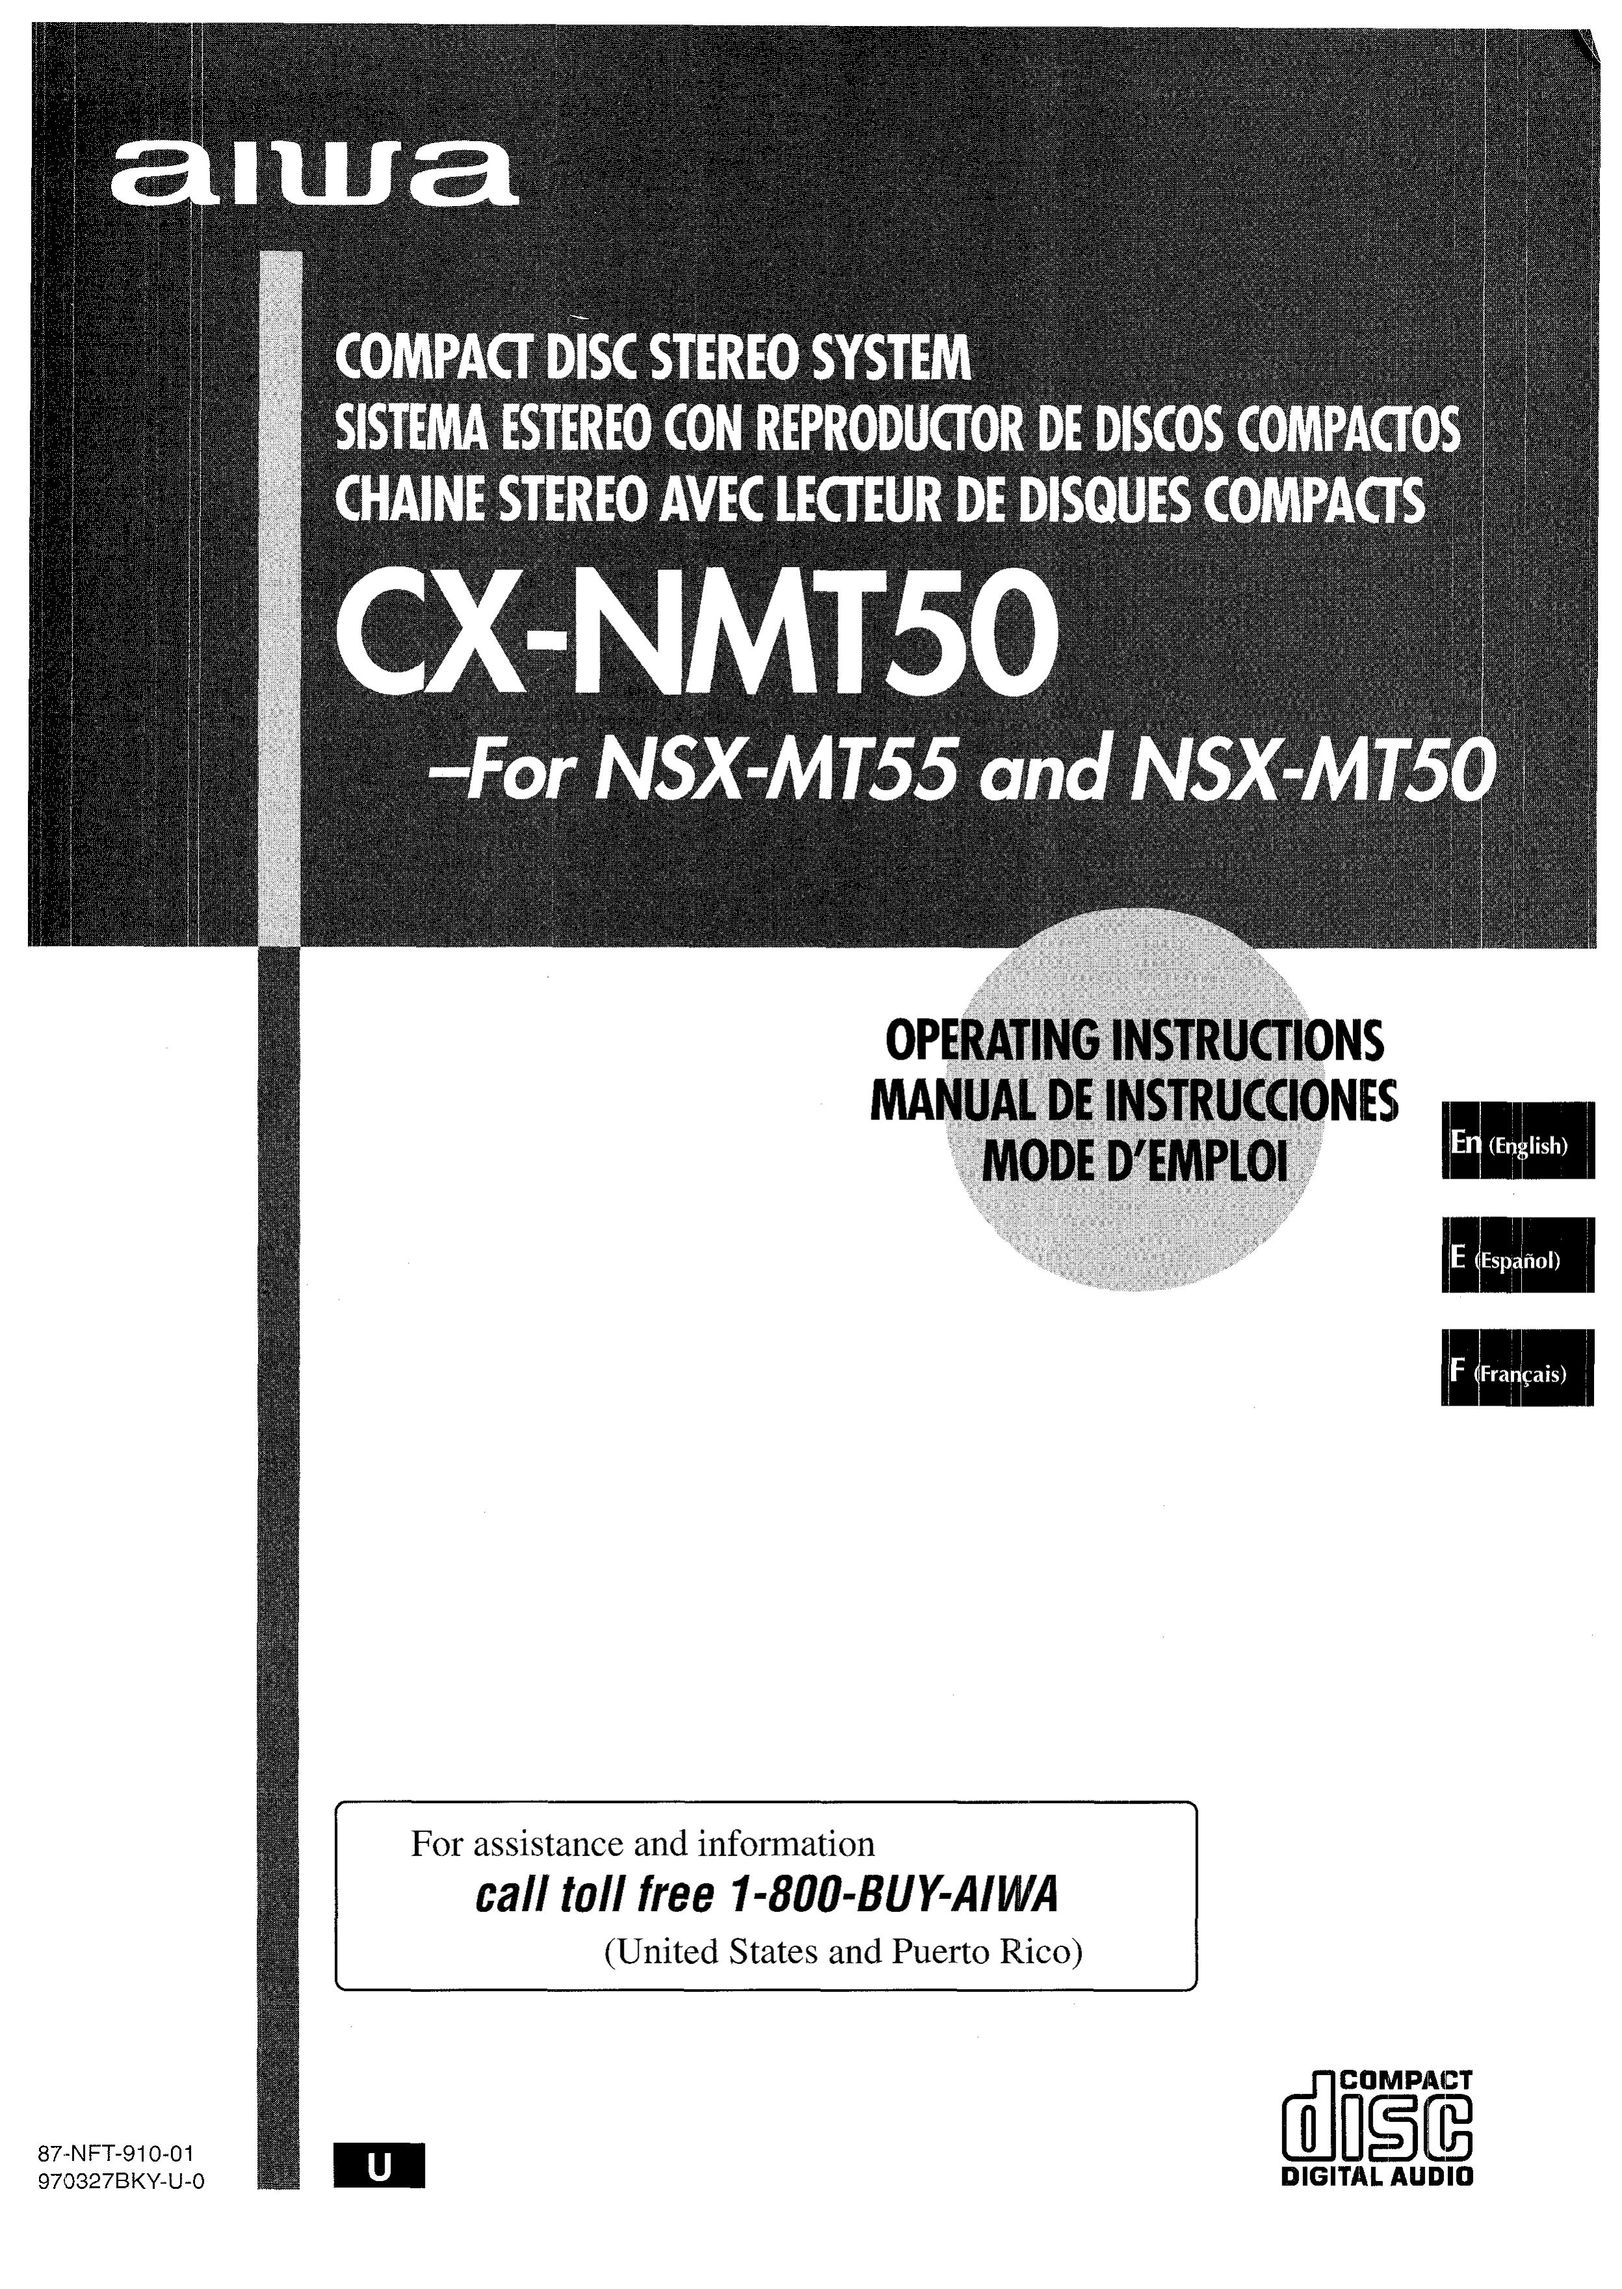 Aiwa CX-NMT50 CD Player User Manual (Page 1)